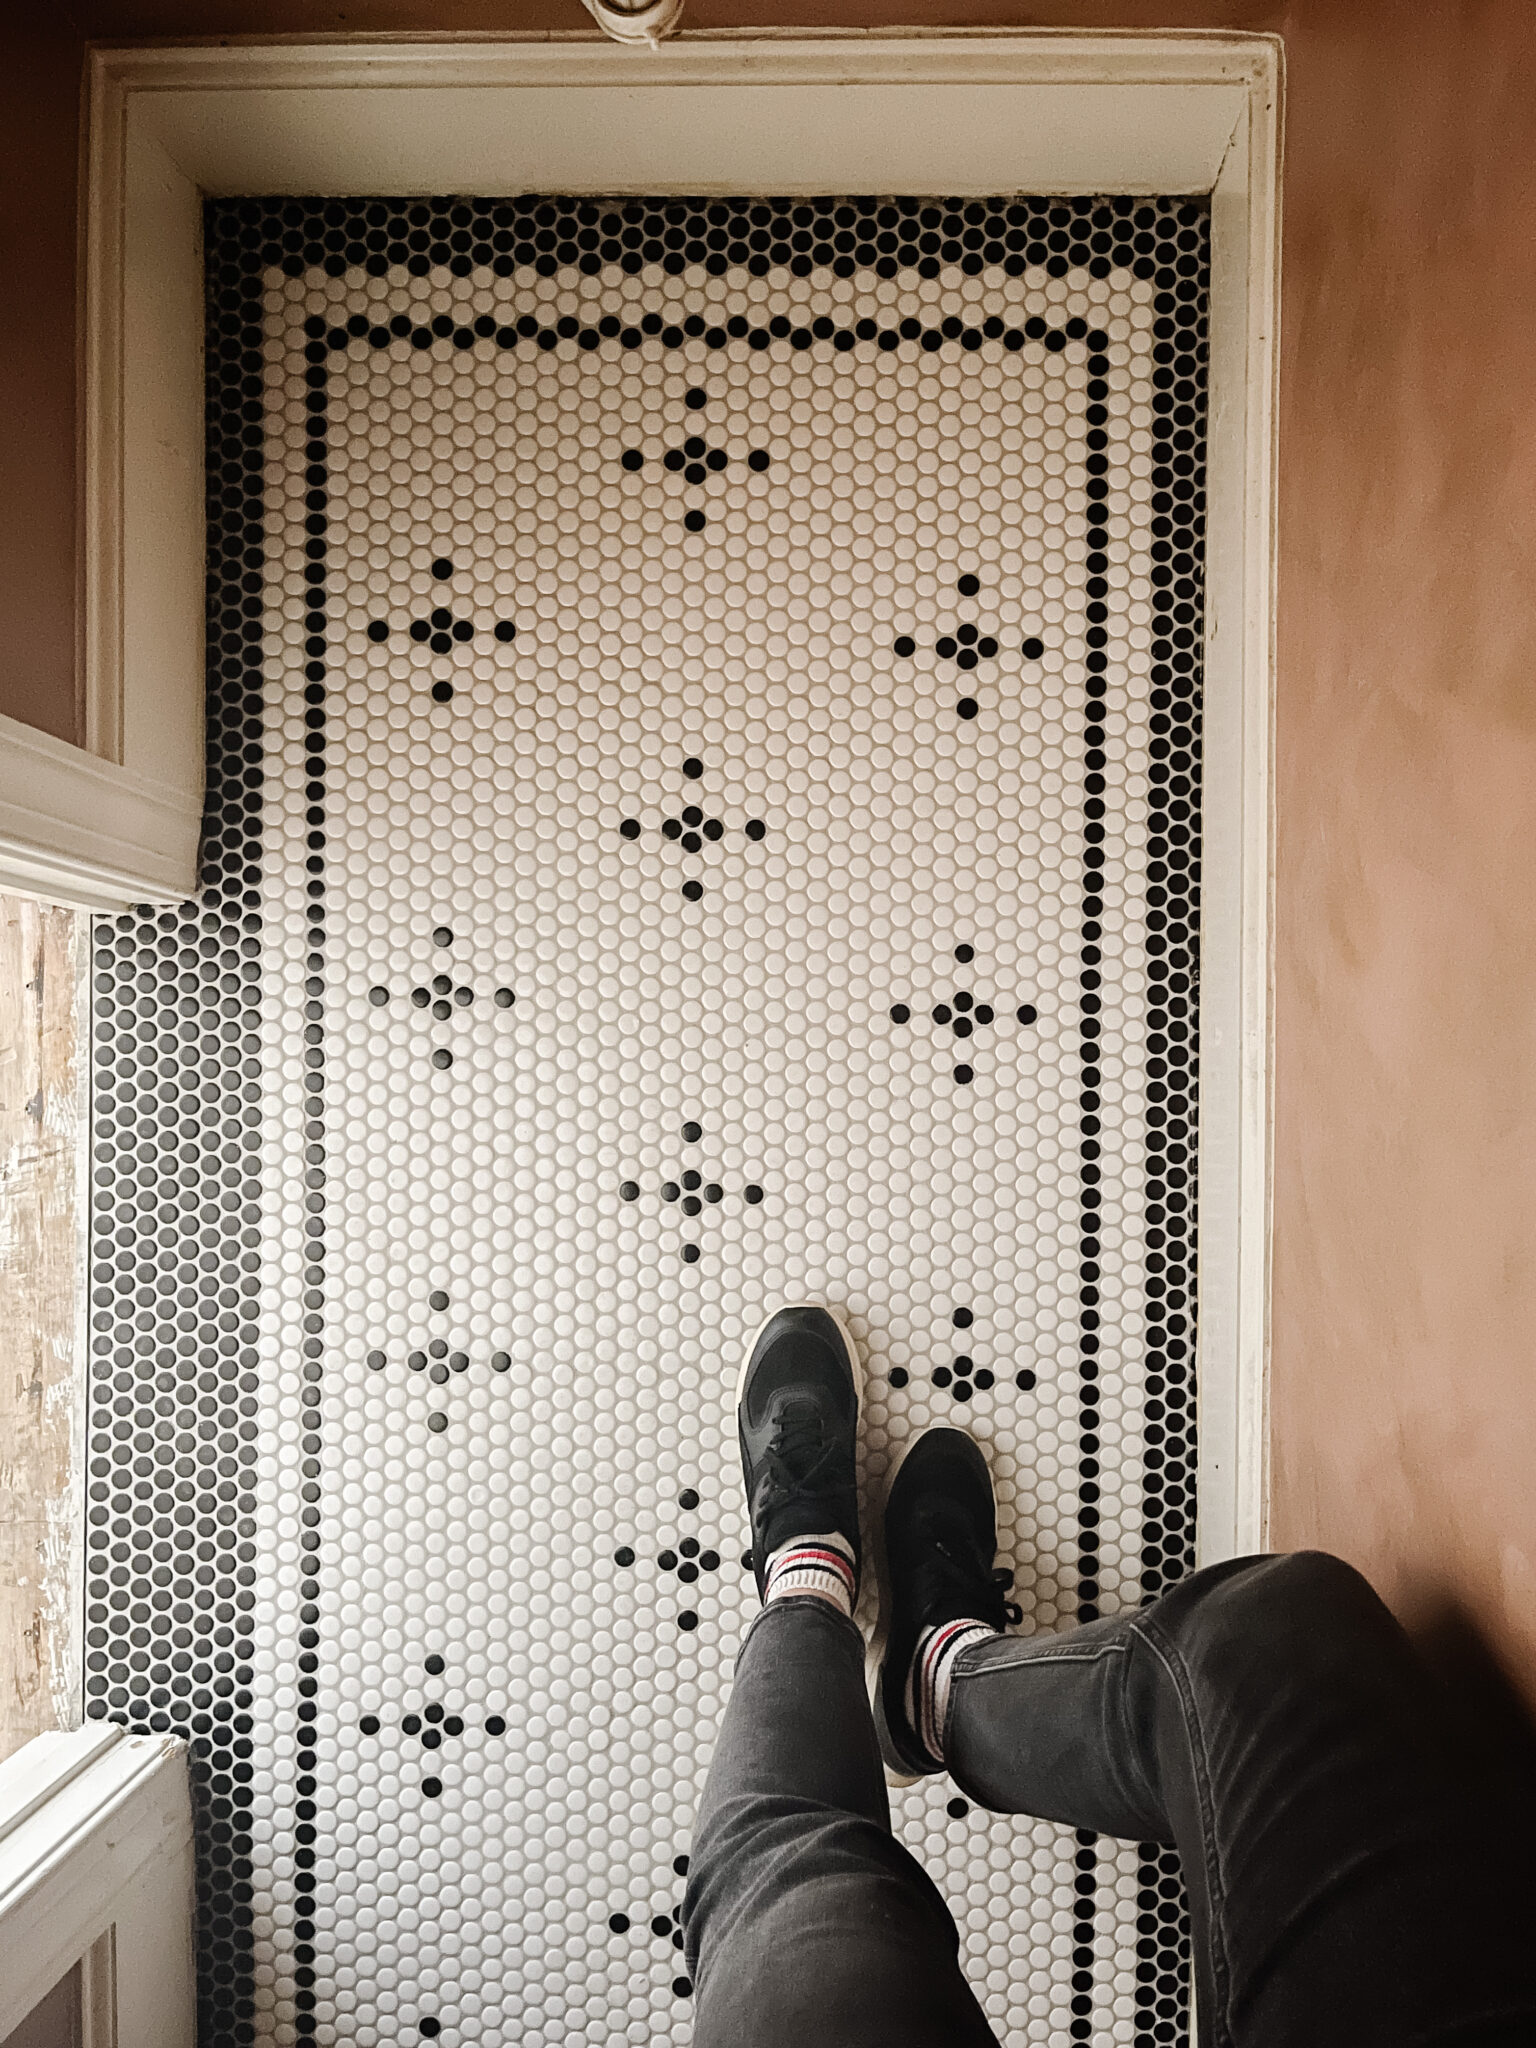 Diy Your Own Penny Tile Patterned Floor, Bathroom Floor Tile Border Ideas